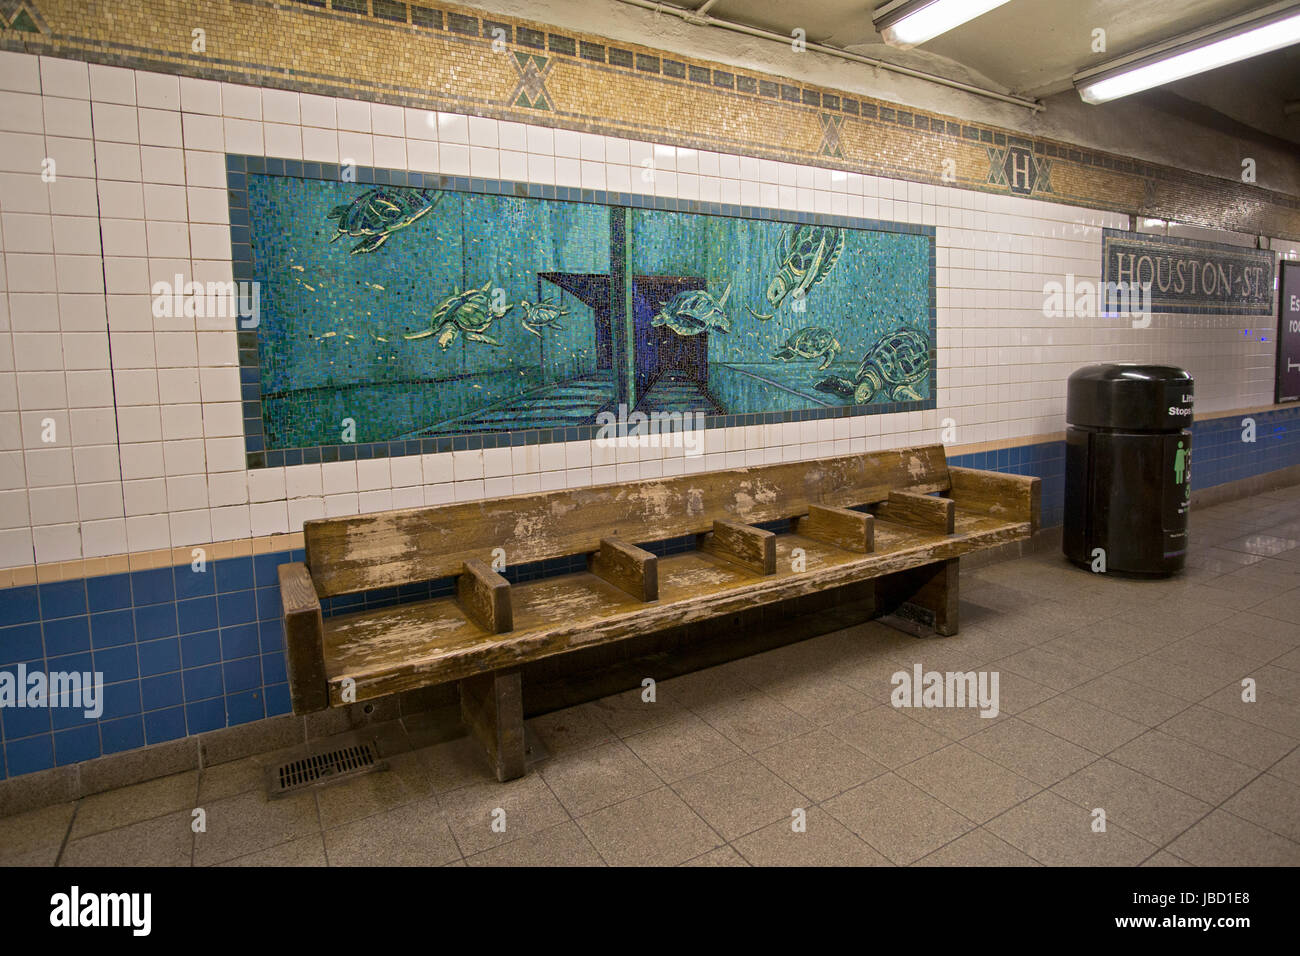 Beautiful nautical themed mosaic artwork at he Houston Street subway station platform in downtown Manhattan, New York City. Stock Photo